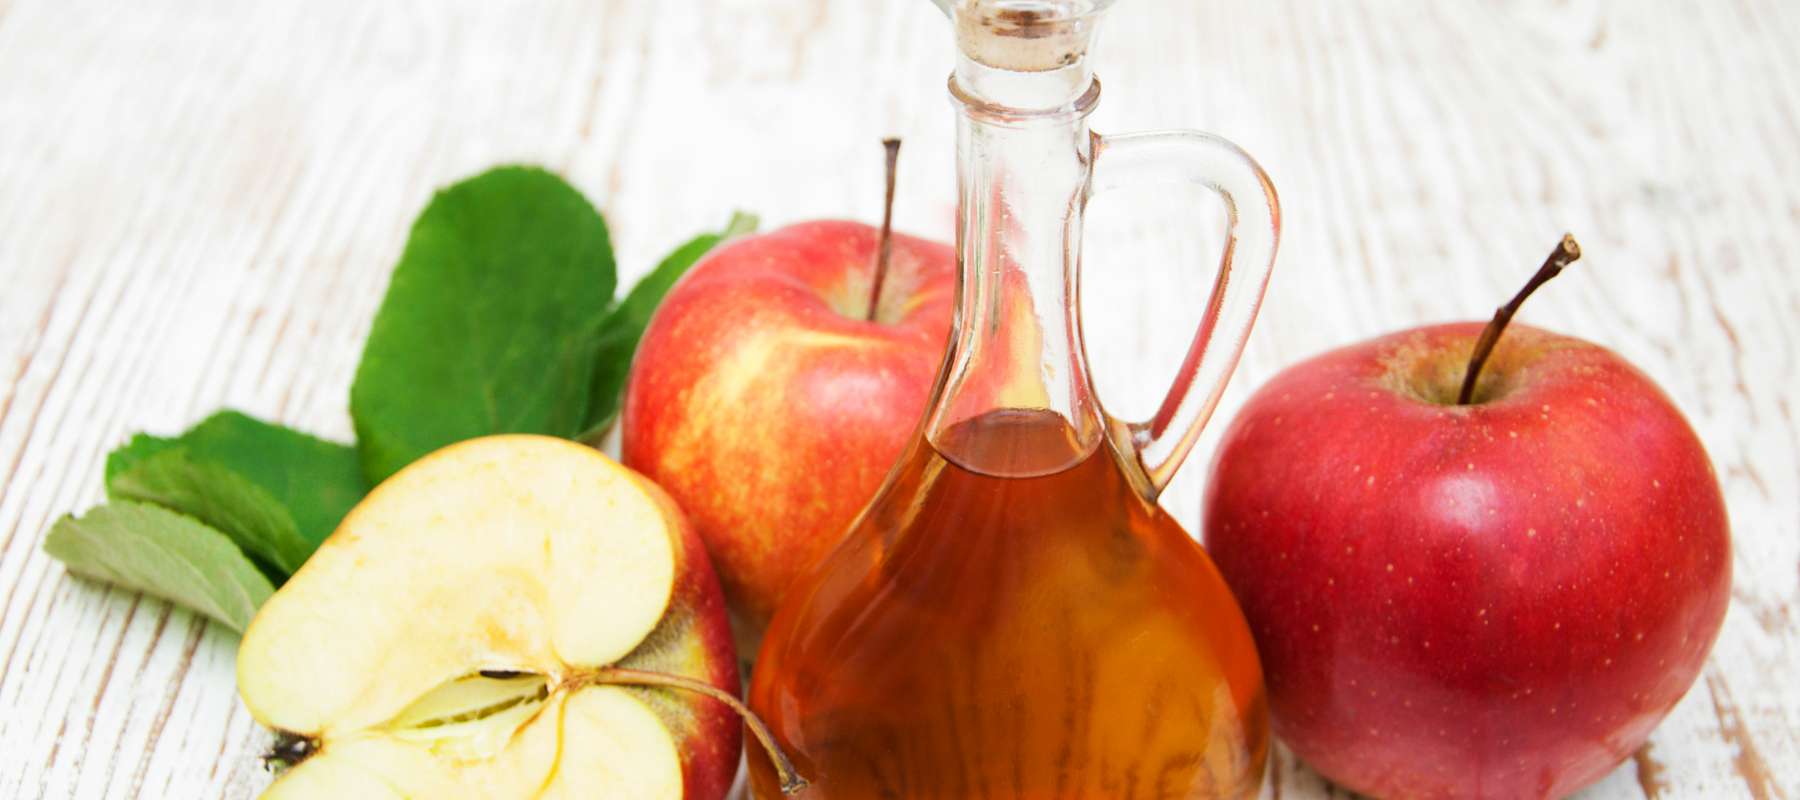 How to Make Apple Scrap Vinegar